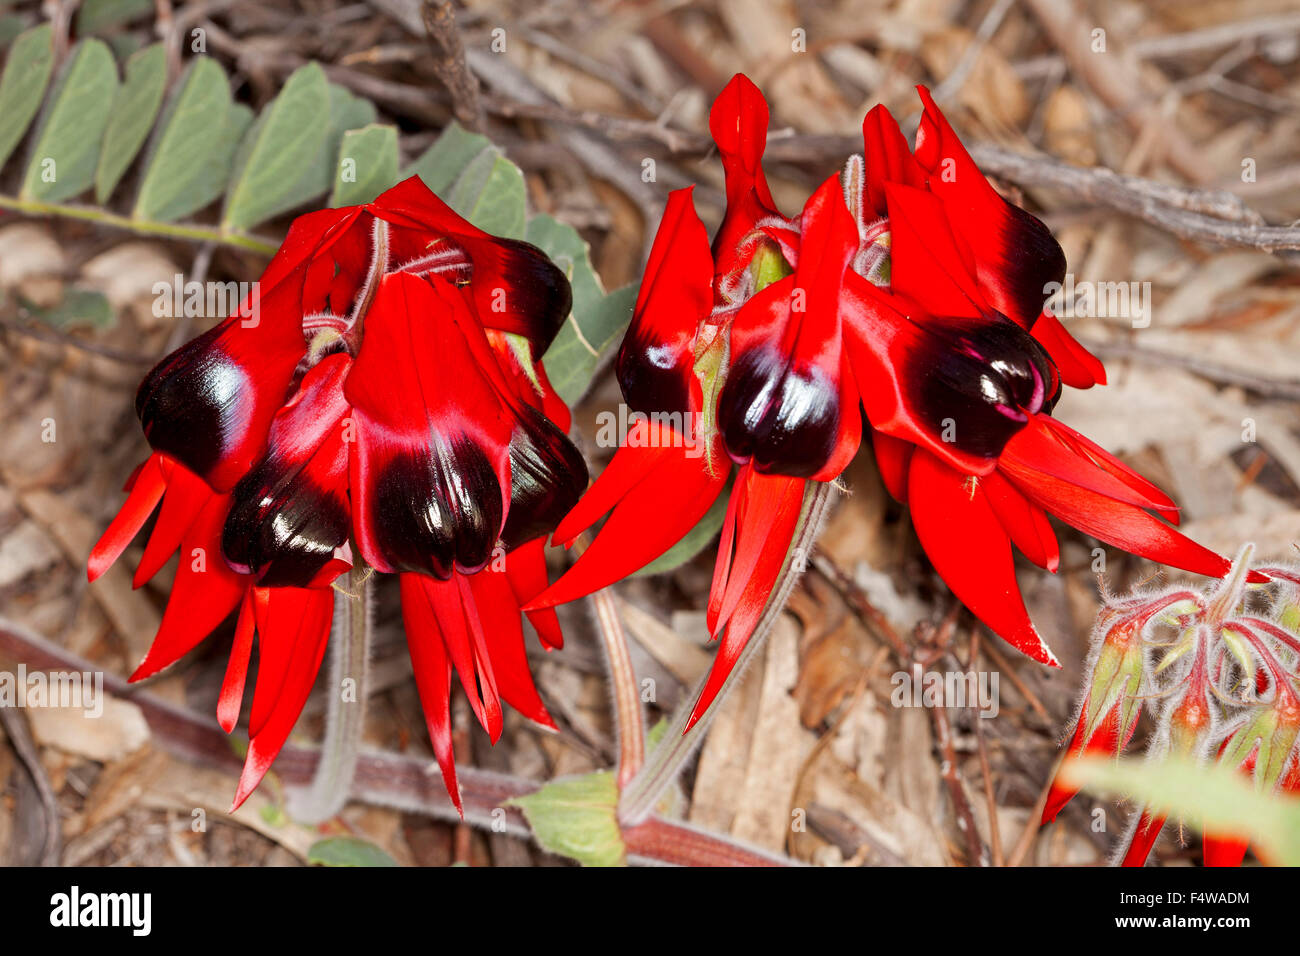 Cluster of vivid red flowers & leaves of Sturt's desert pea Swainsona formosa in Flinders Ranges in outback South Australia Stock Photo